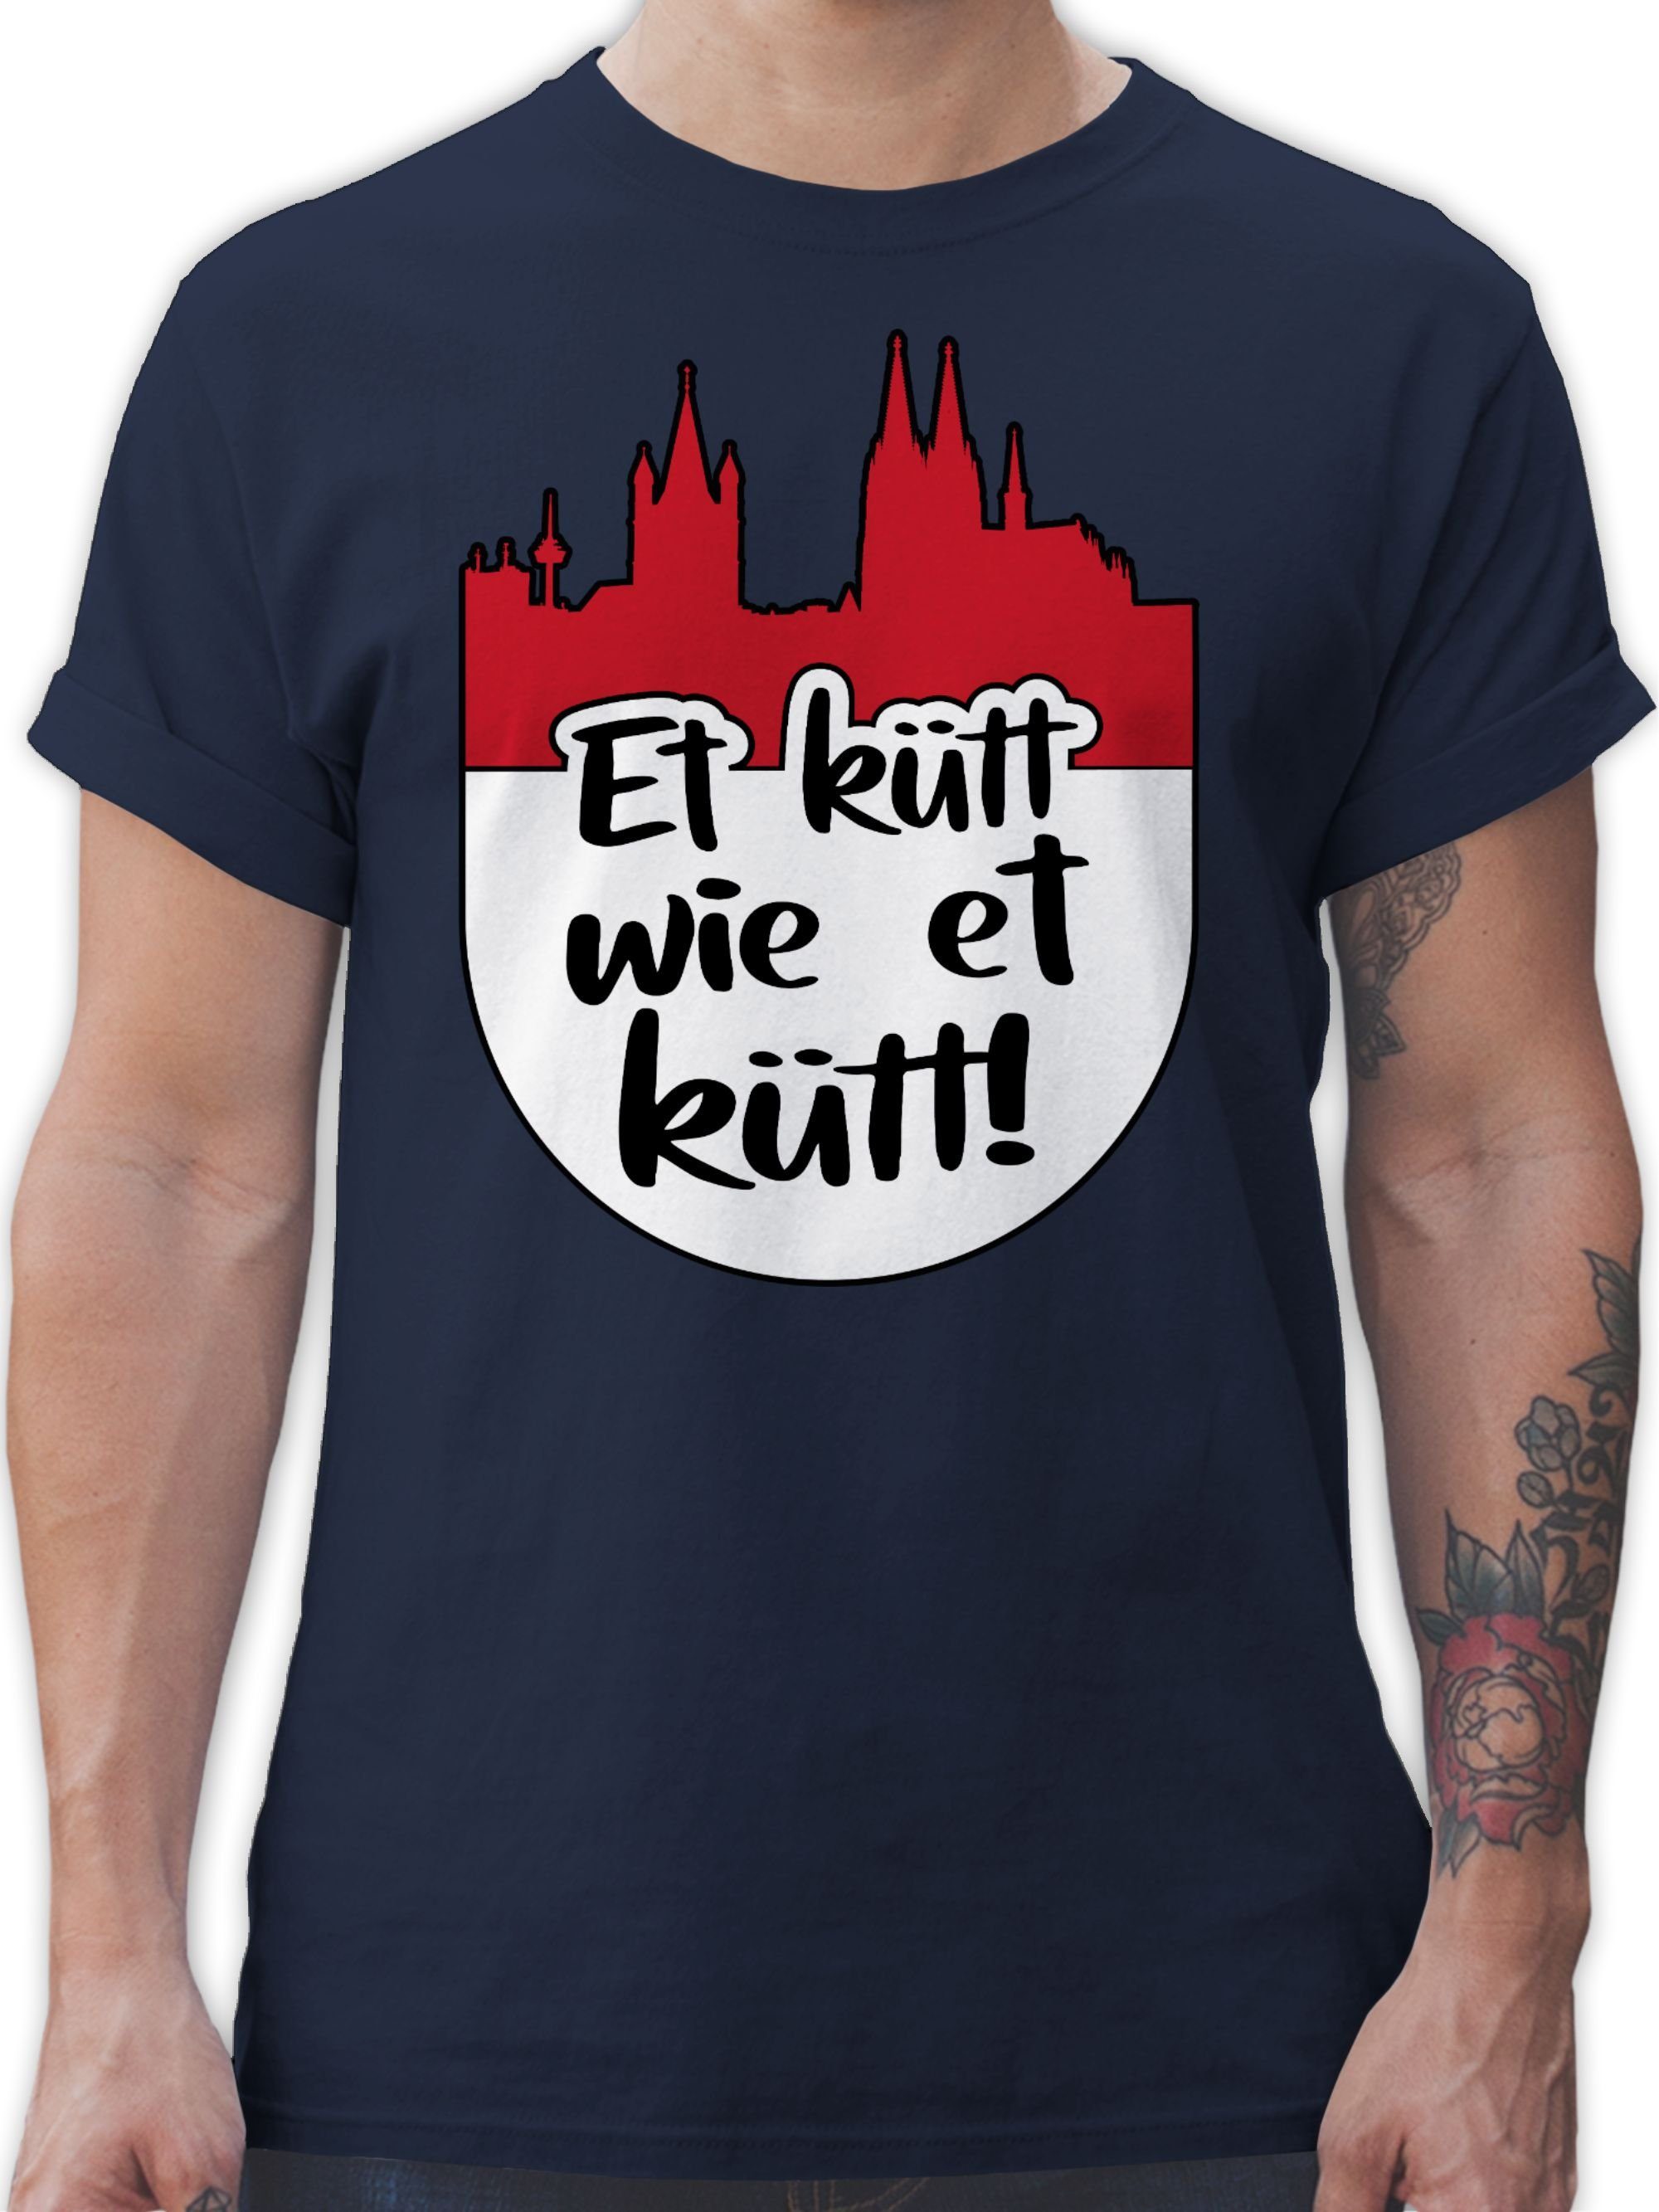 Shirtracer T-Shirt Et kütt wie et kütt! rot weiß - Kölsch Grundgesetz Köln Echte Kölner Karneval Outfit 3 Navy Blau